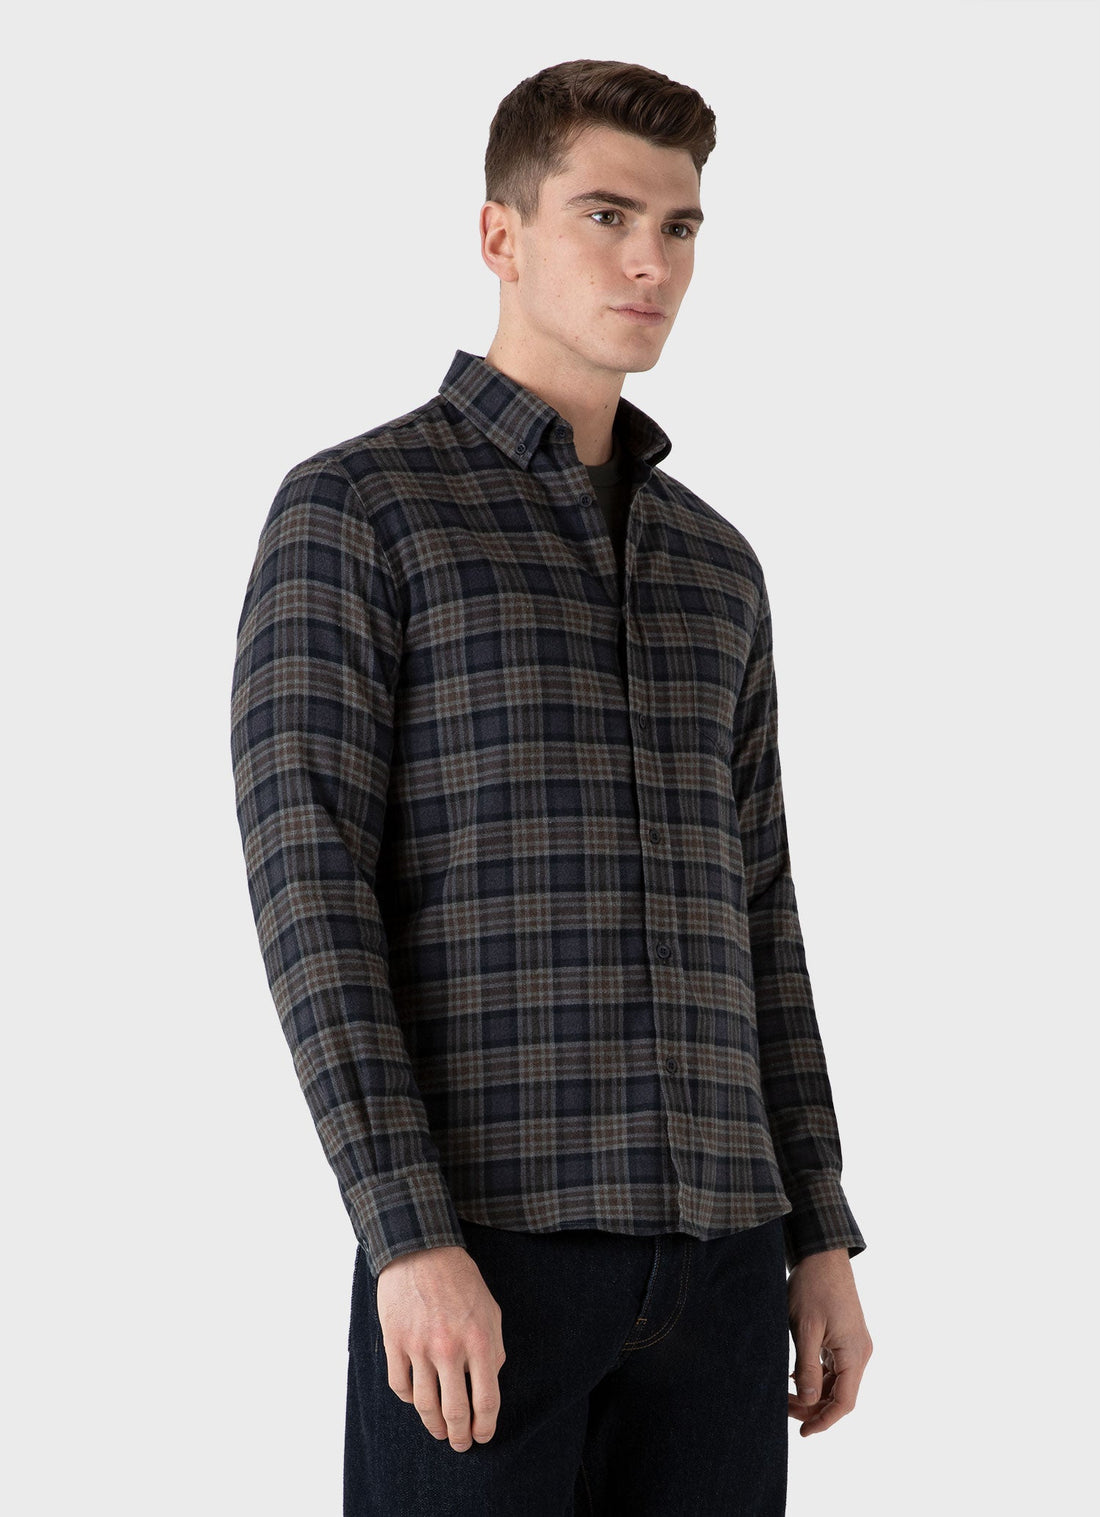 Men's Button Down Flannel Shirt in Sandstone Check